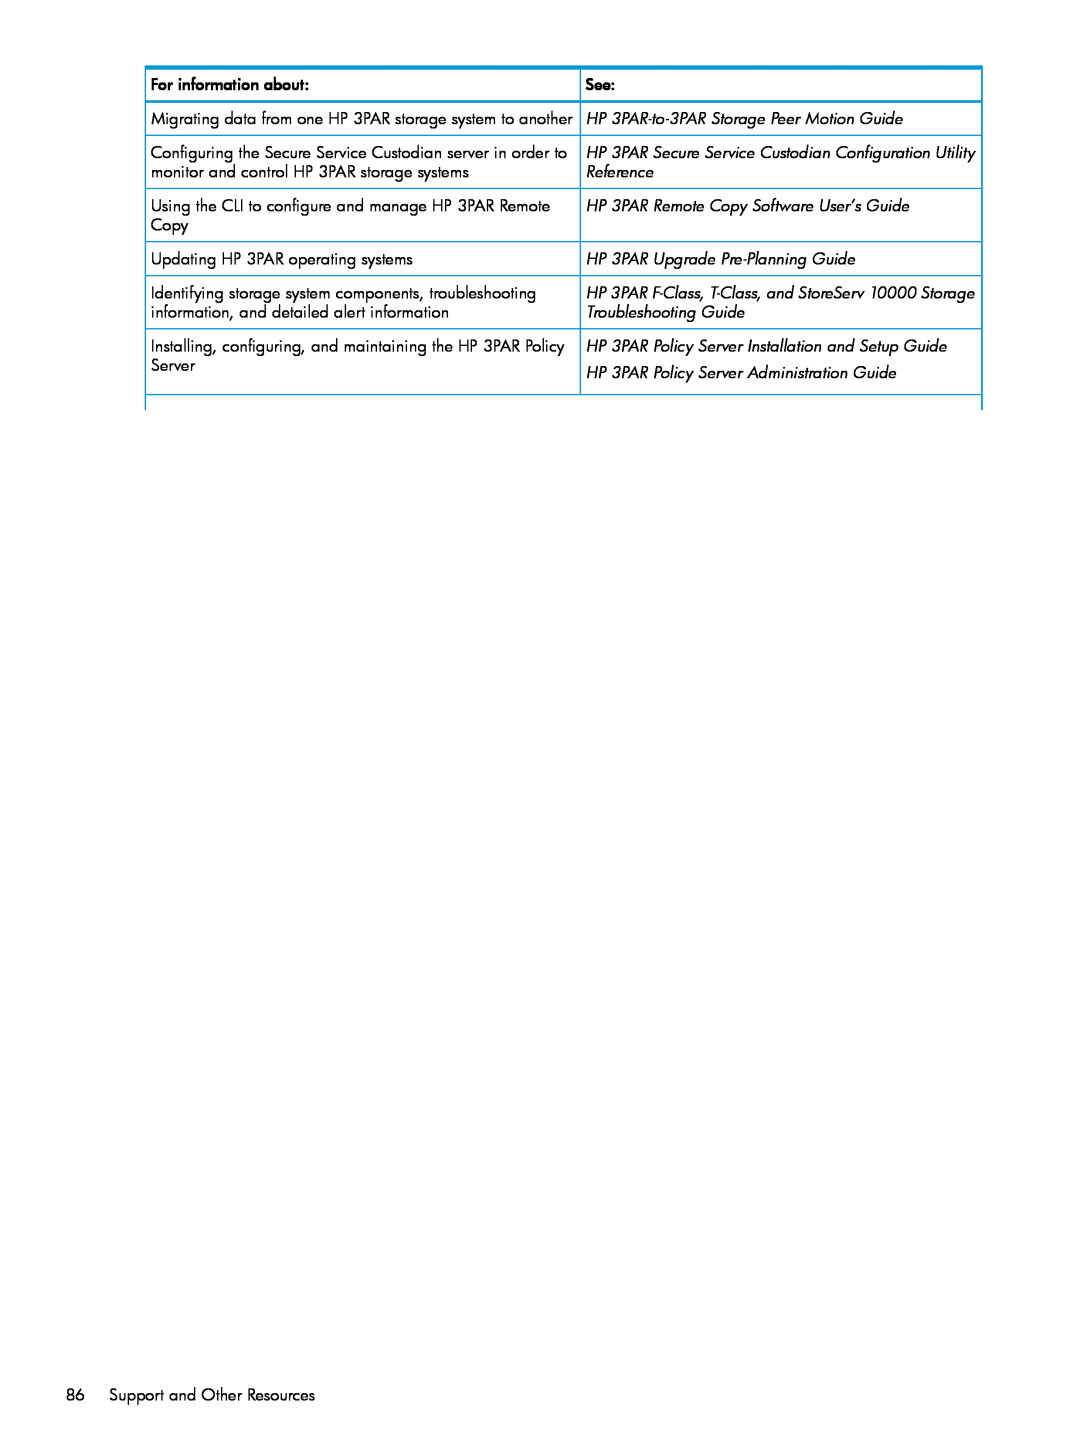 HP QR516B manual HP 3PAR-to-3PAR Storage Peer Motion Guide, Reference, HP 3PAR Remote Copy Software User’s Guide 